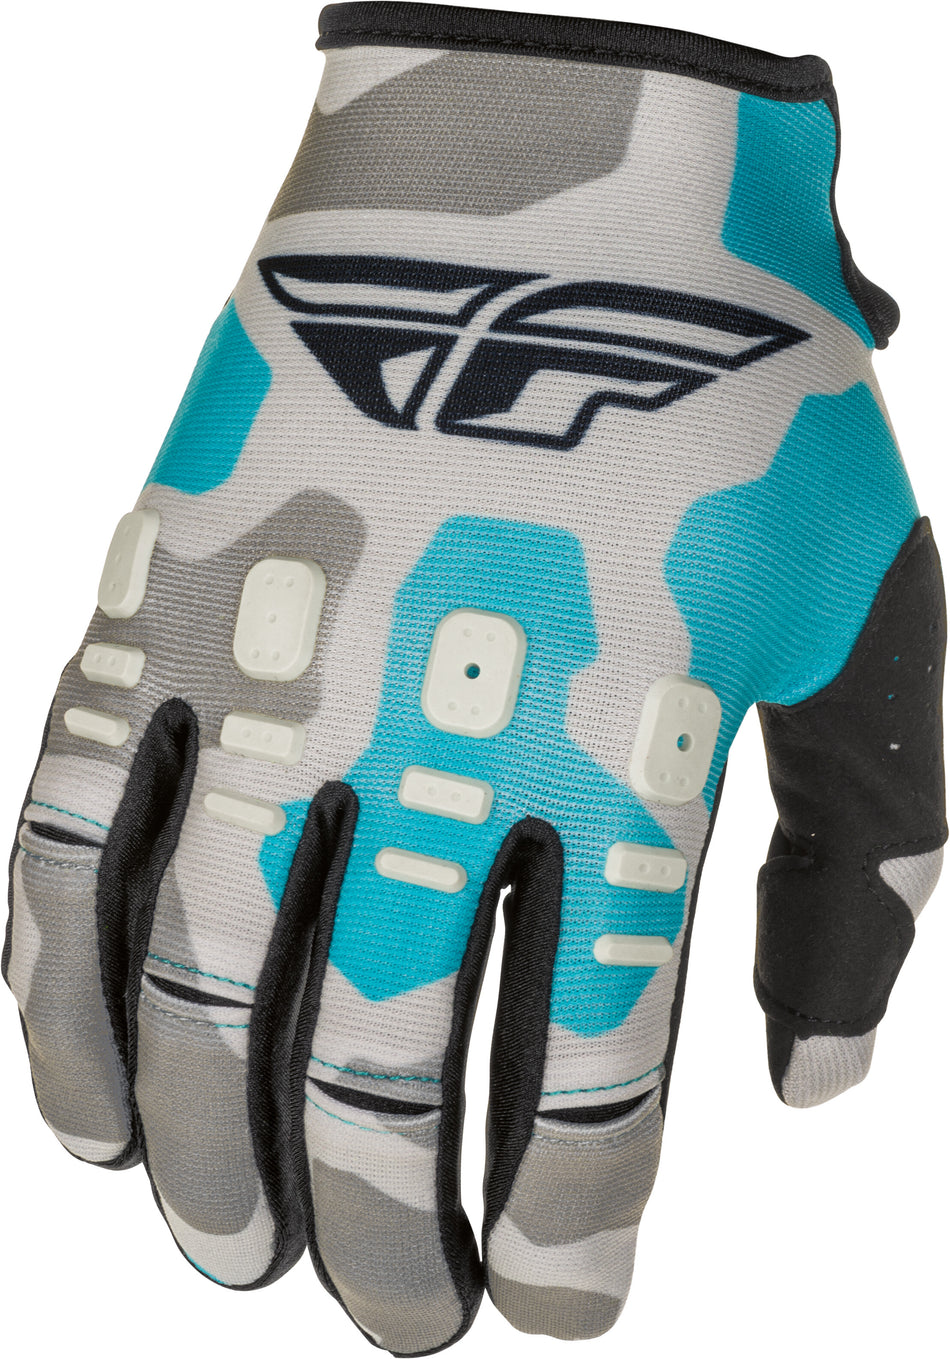 FLY RACING Kinetic K221 Gloves Grey/Blue Sz 13 374-51613